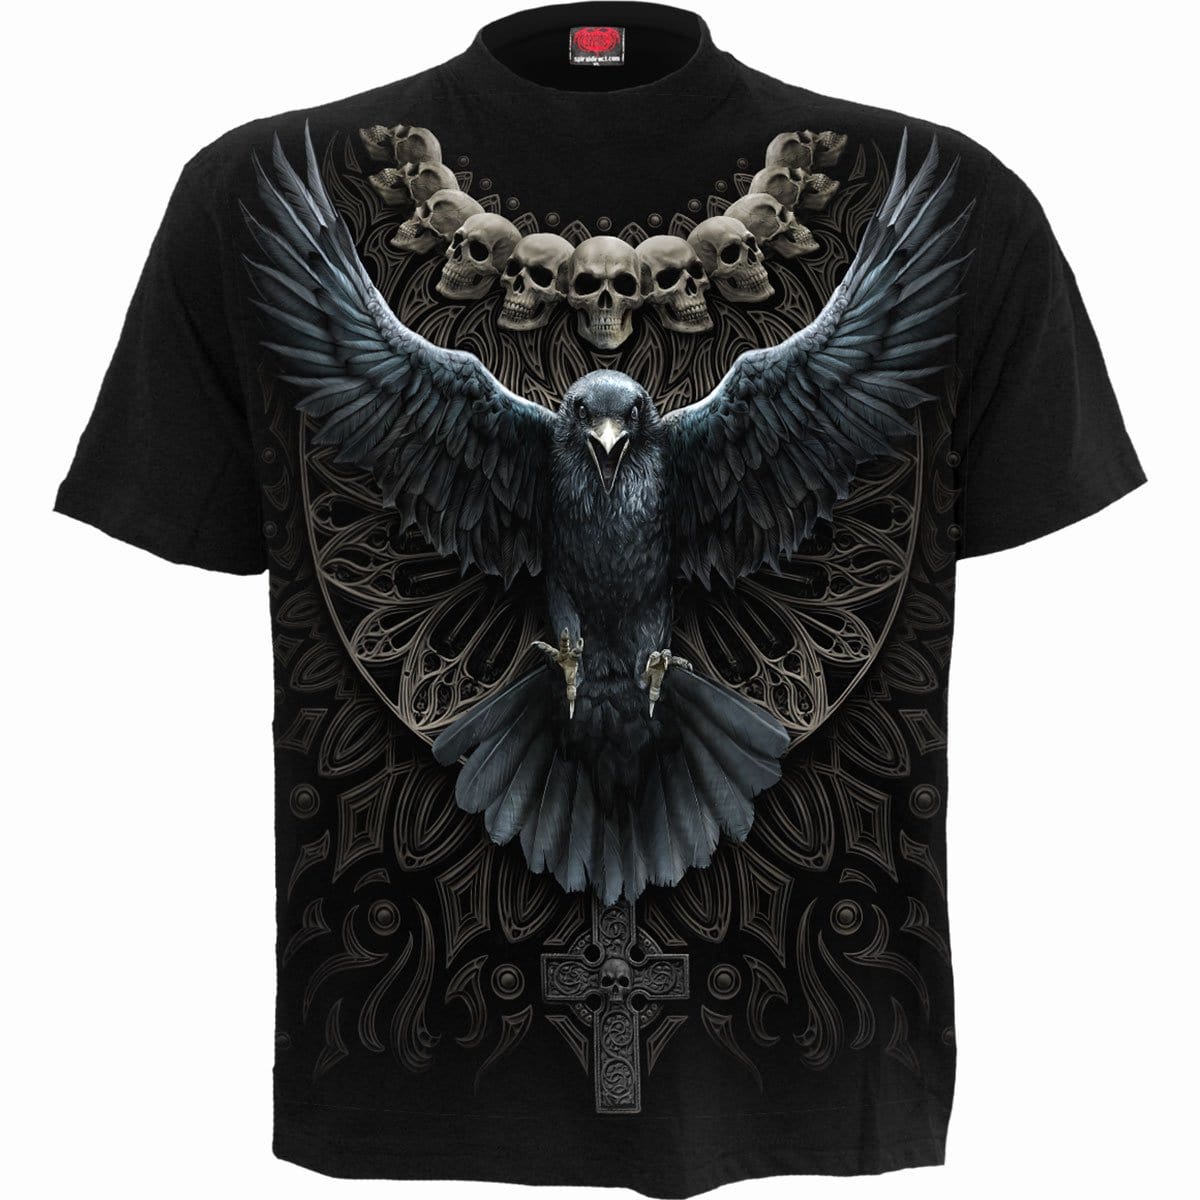 RAVEN SKULL - T-Shirt Black - Spiral USA